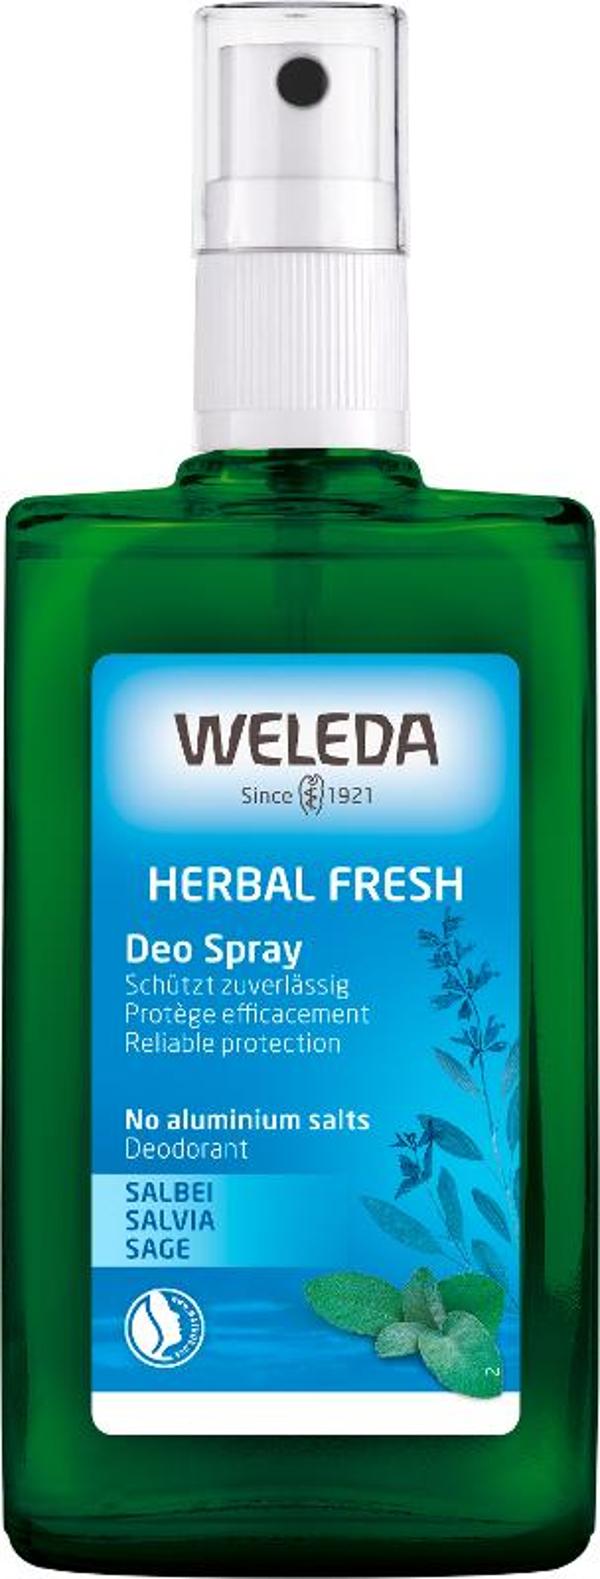 Produktfoto zu Herbal Fresh Deodorant Salbei